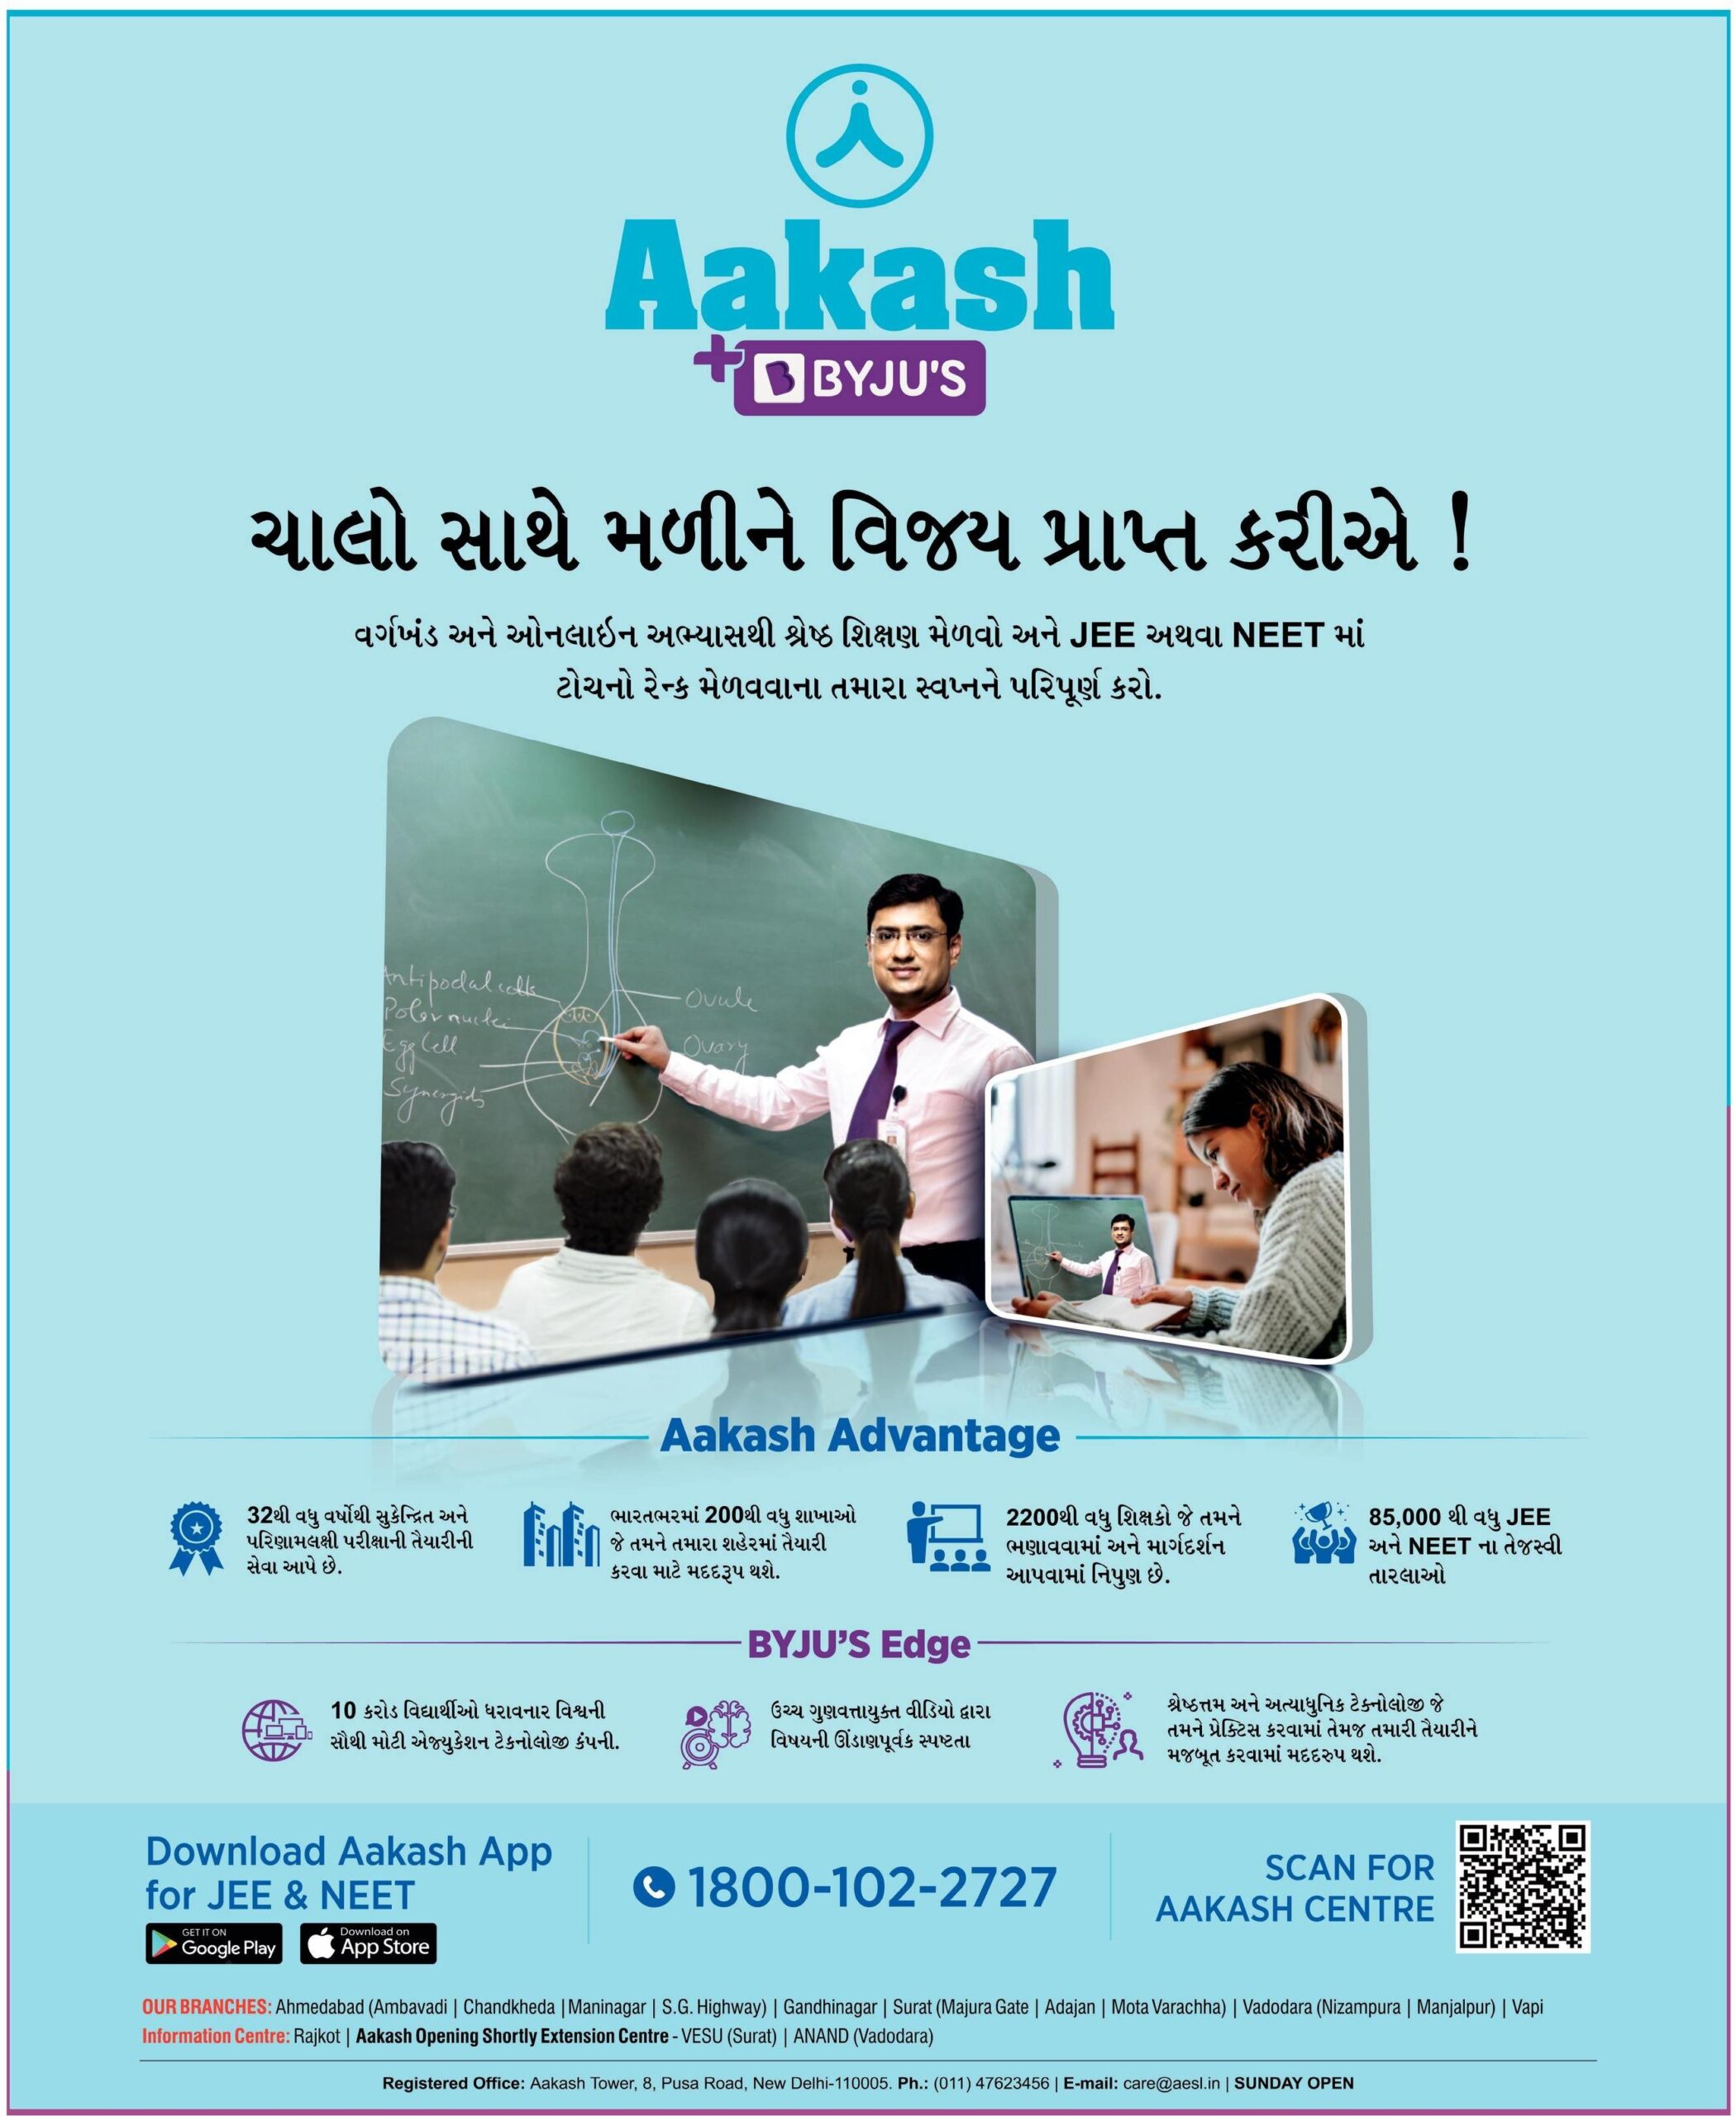 aakash-plus-byjus-download-aakash-app-for-jee-and-neet-ad-gujarat-samachar-ahmedabad-26-06-2021